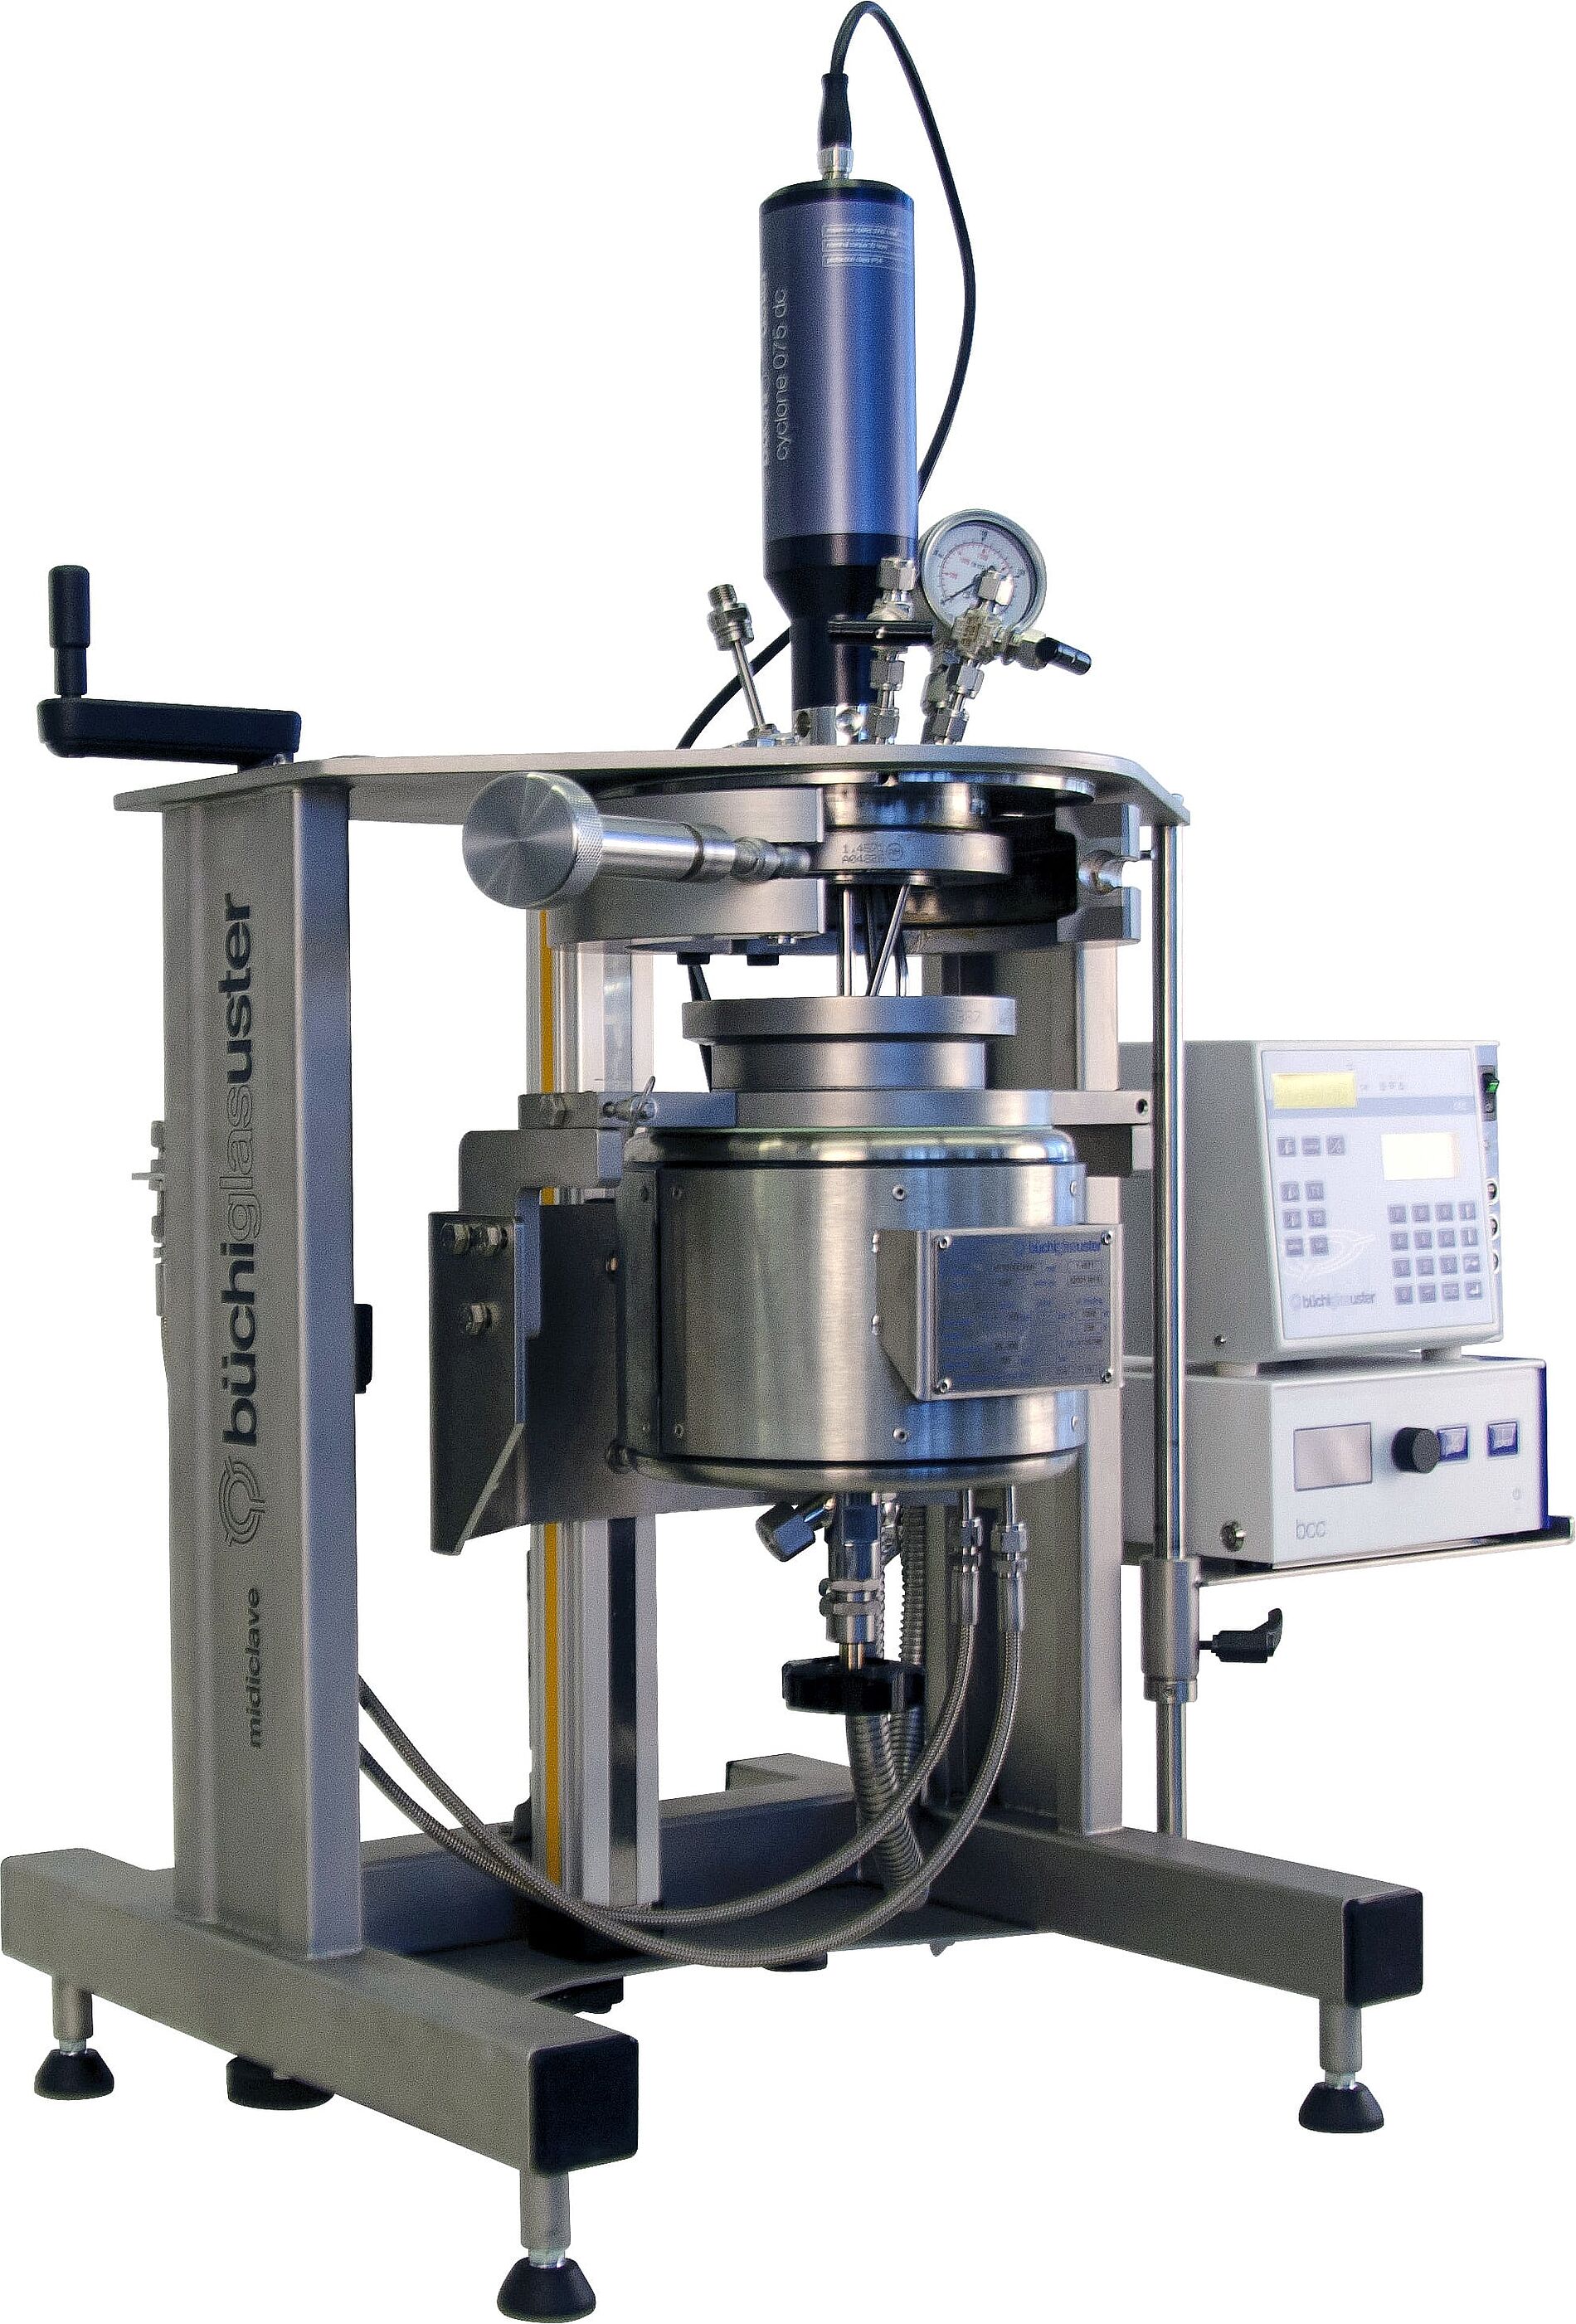 midiclave pressure reactor